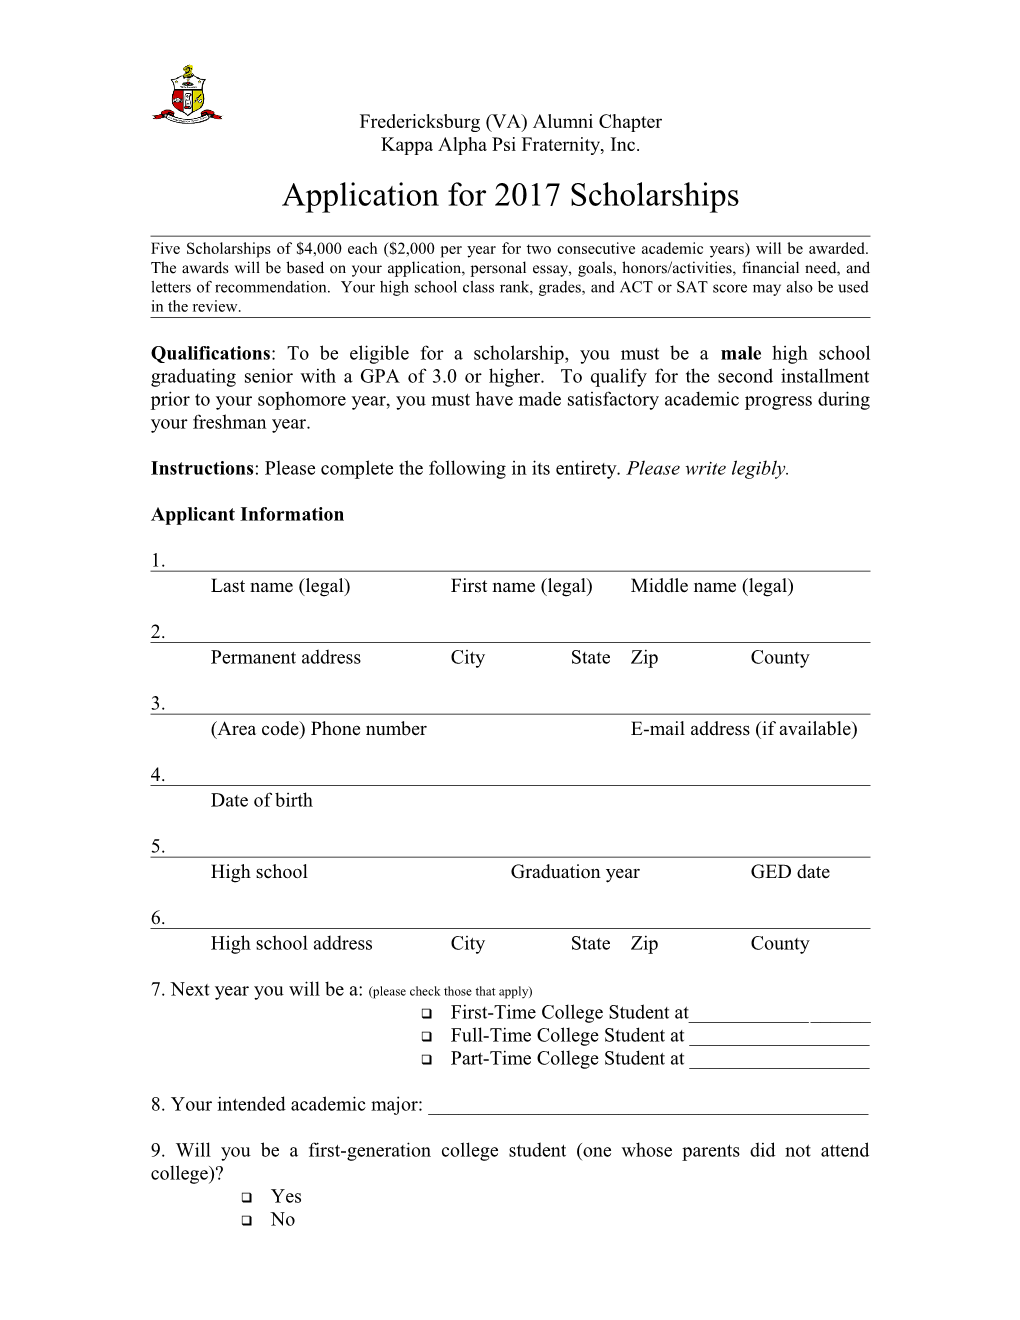 Application for Scholarships